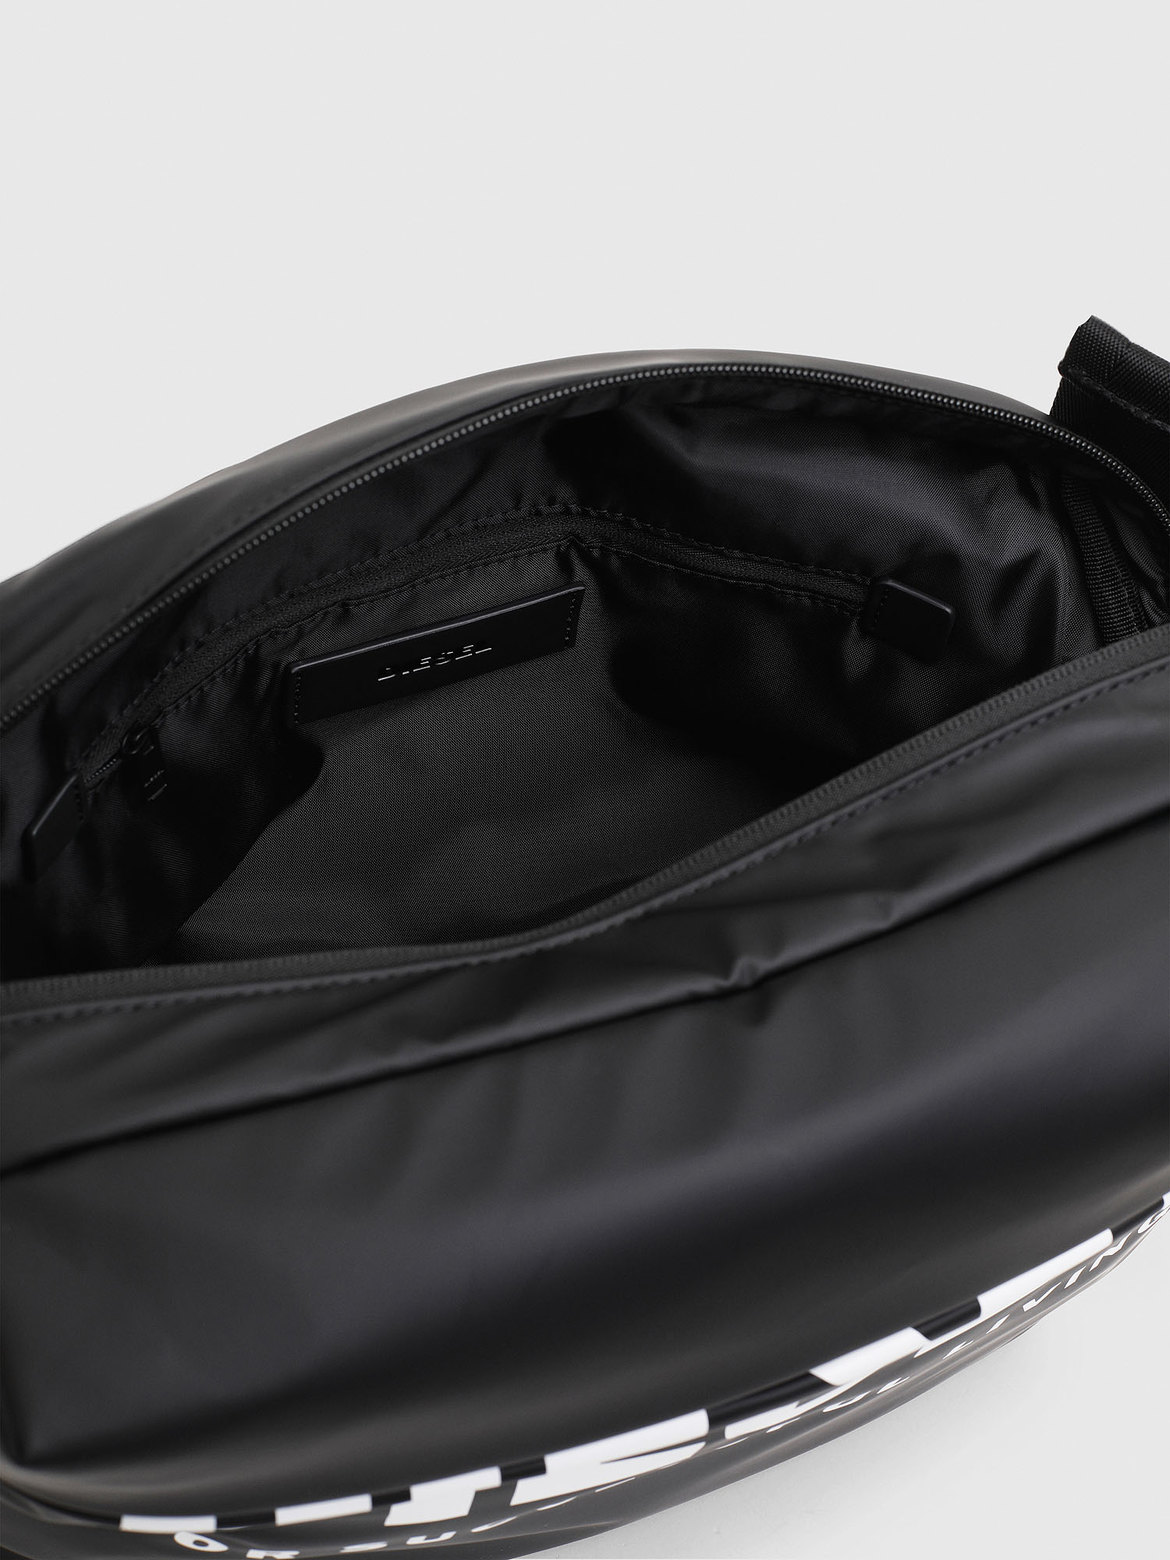 One-Shoulder Bag | Diesel